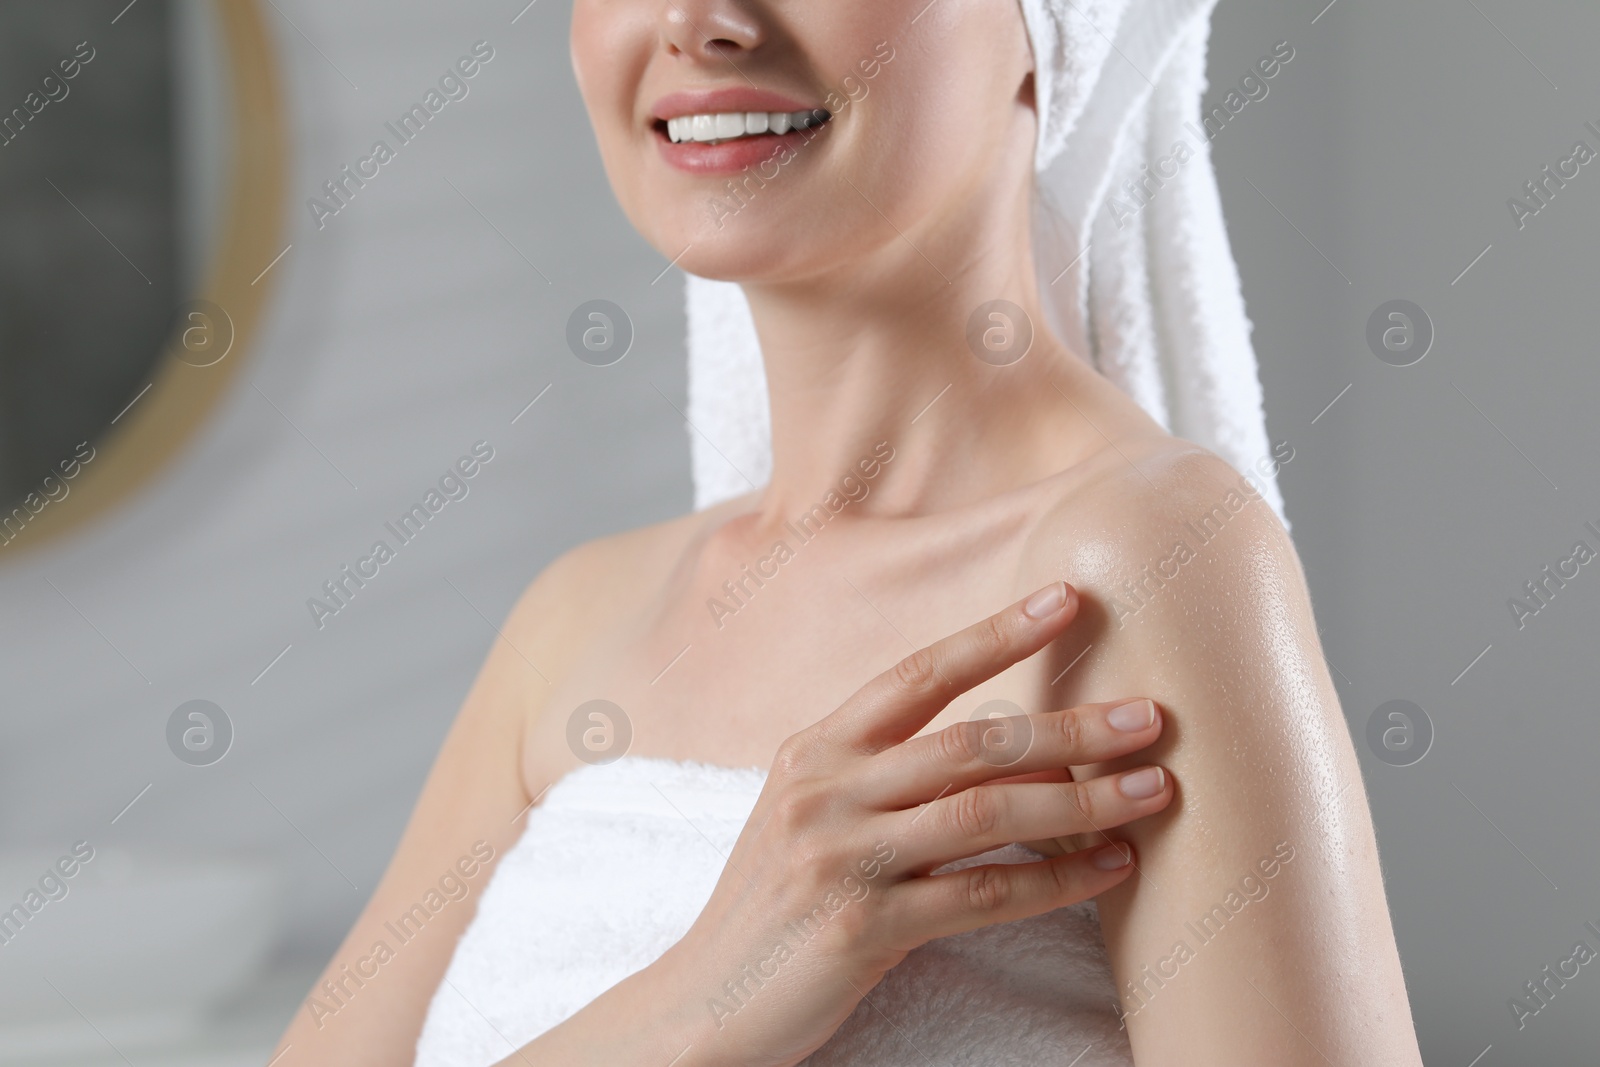 Photo of Woman applying body oil onto arm indoors, closeup